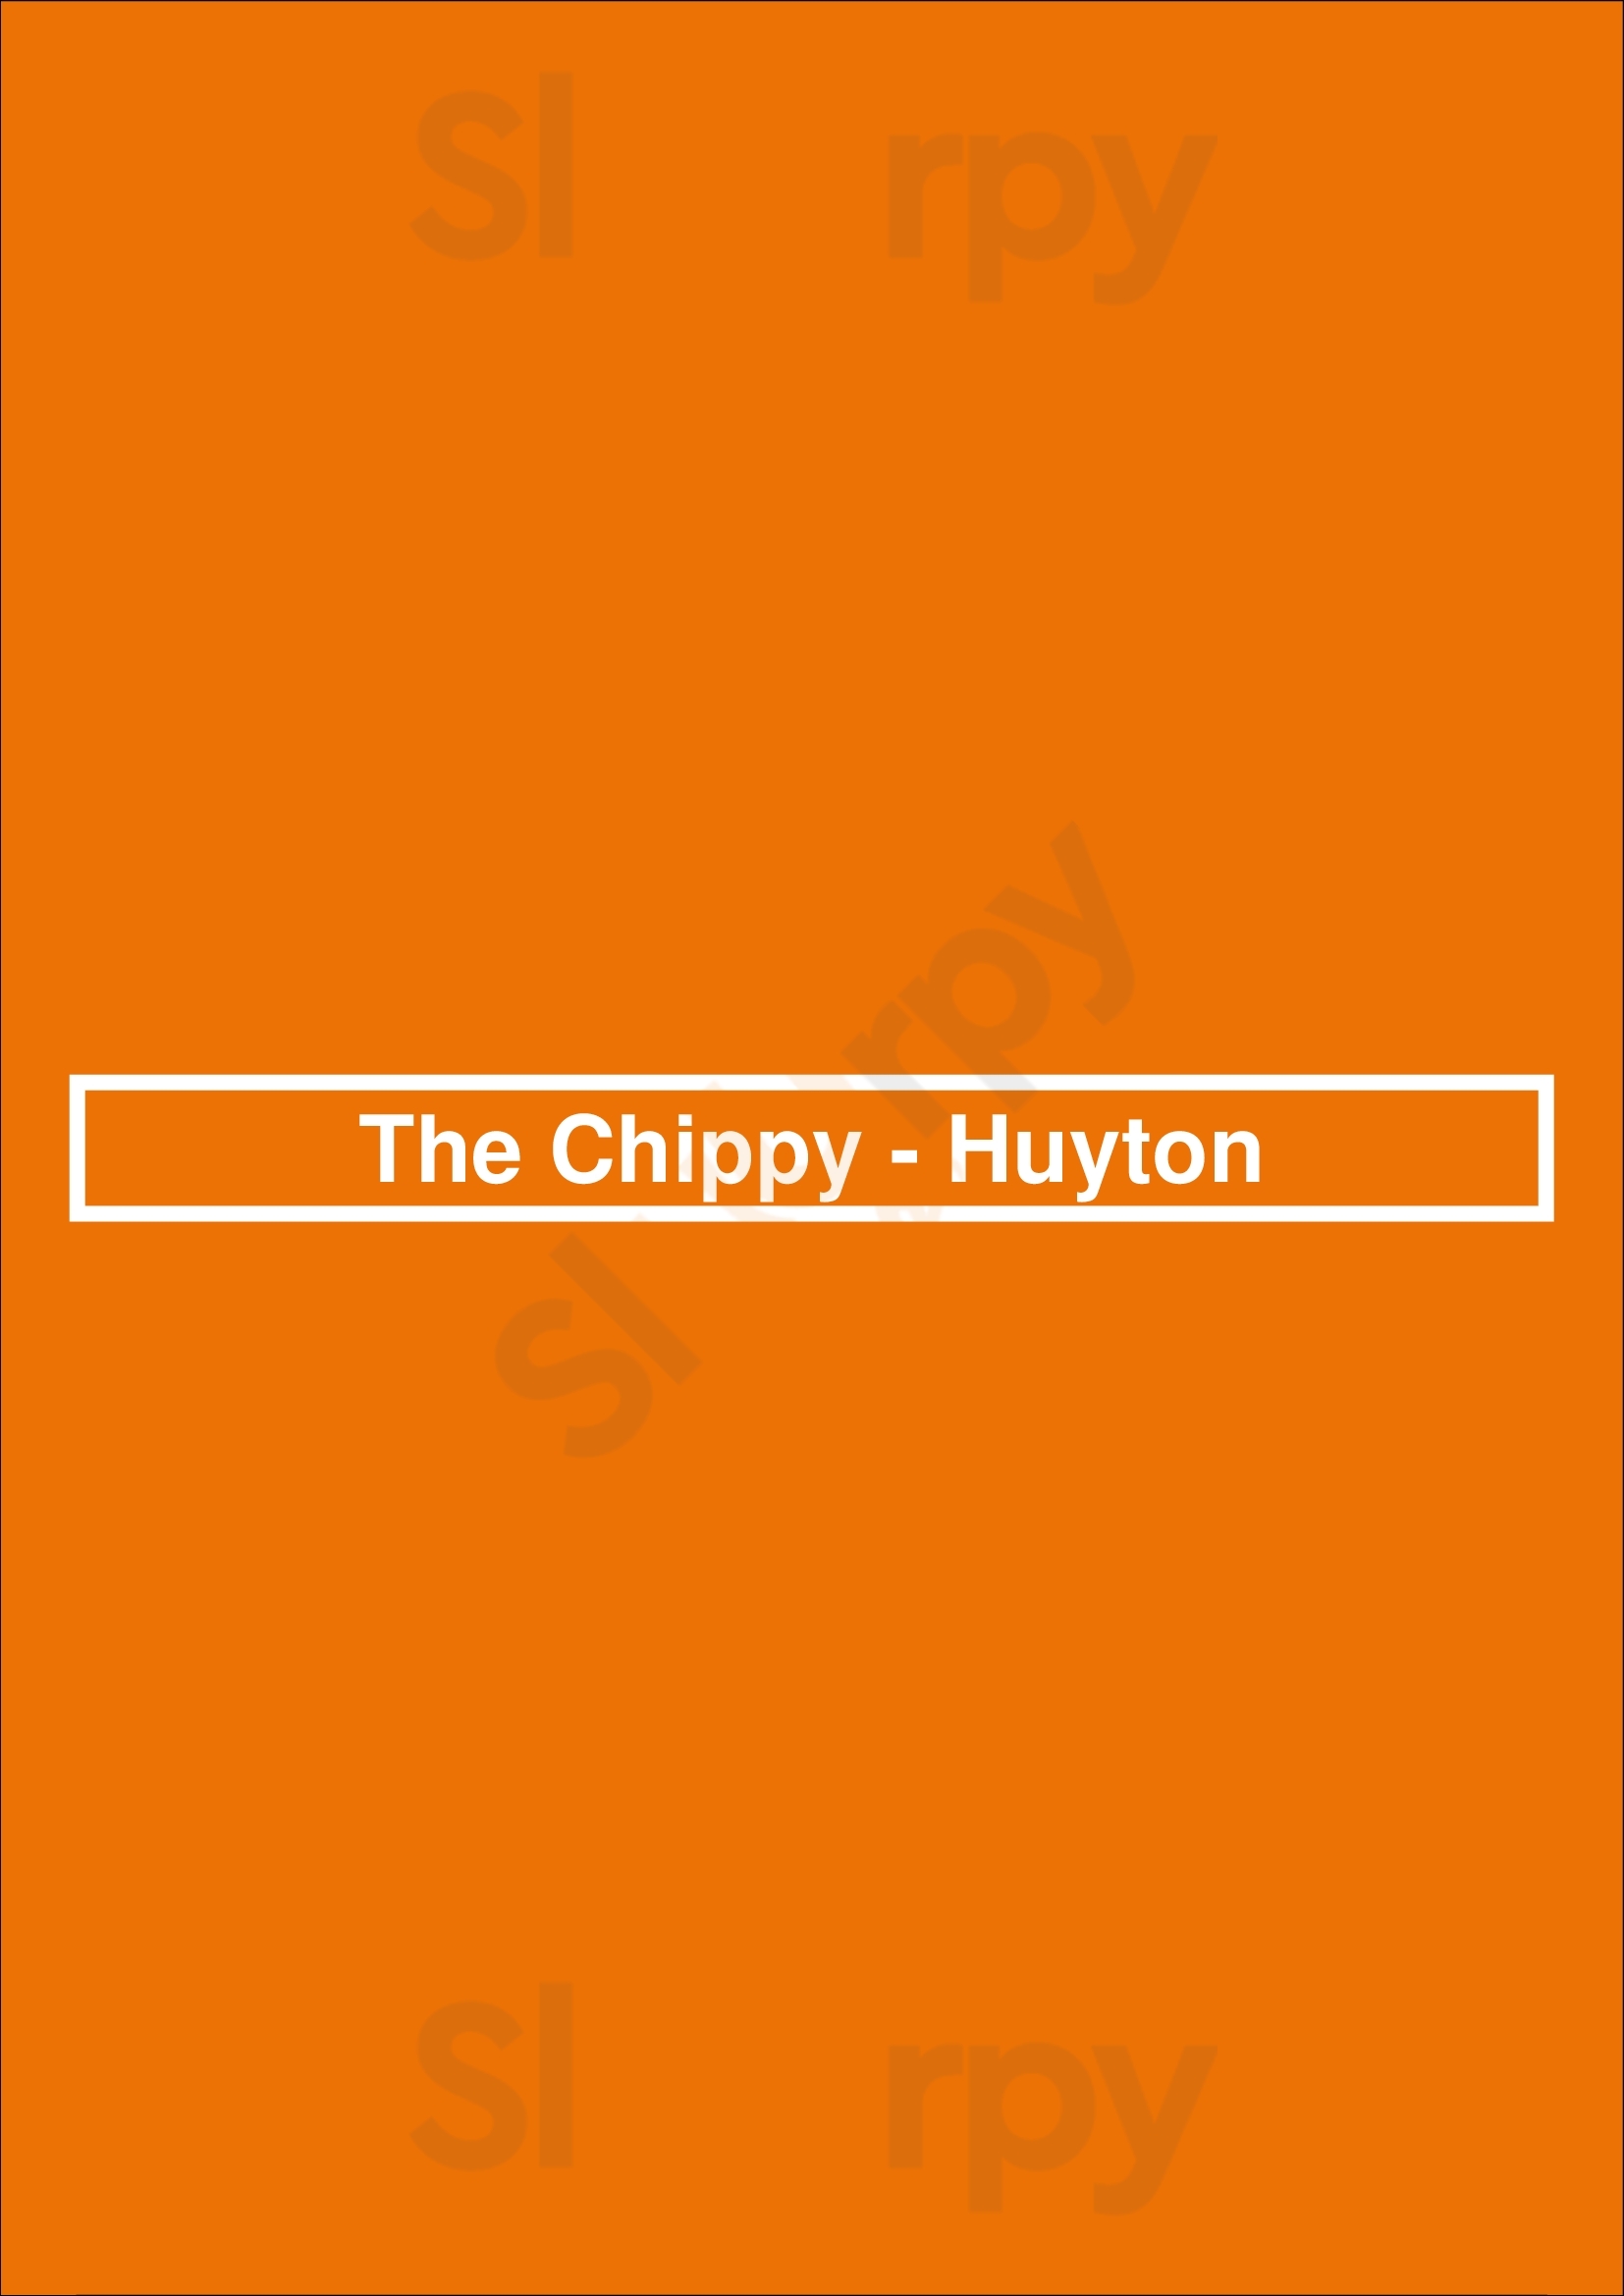 The Chippy - Huyton Huyton Menu - 1